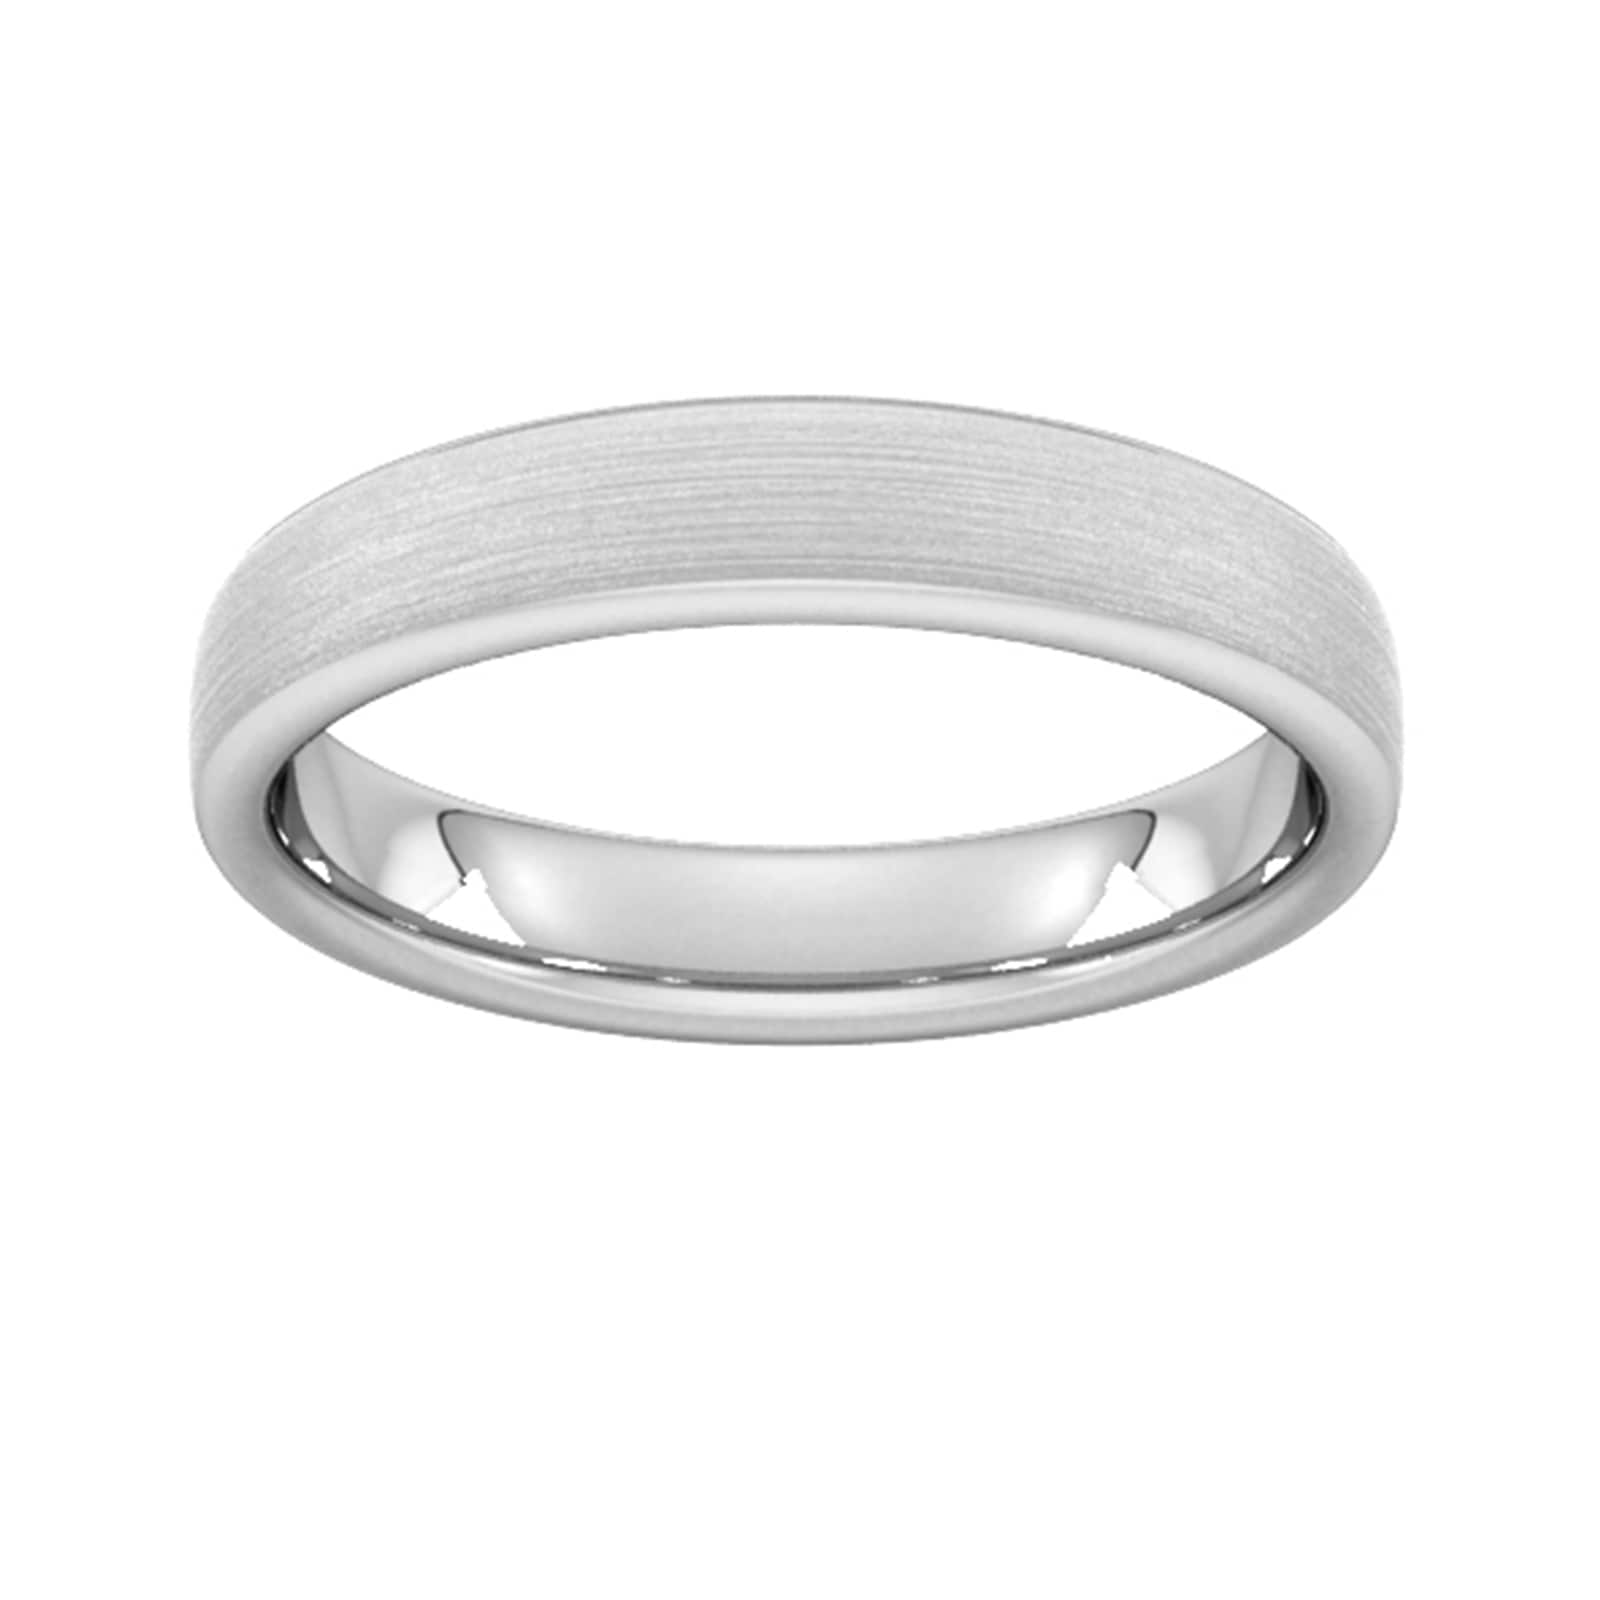 4mm D Shape Heavy Matt Finished Wedding Ring In 950 Palladium - Ring Size P